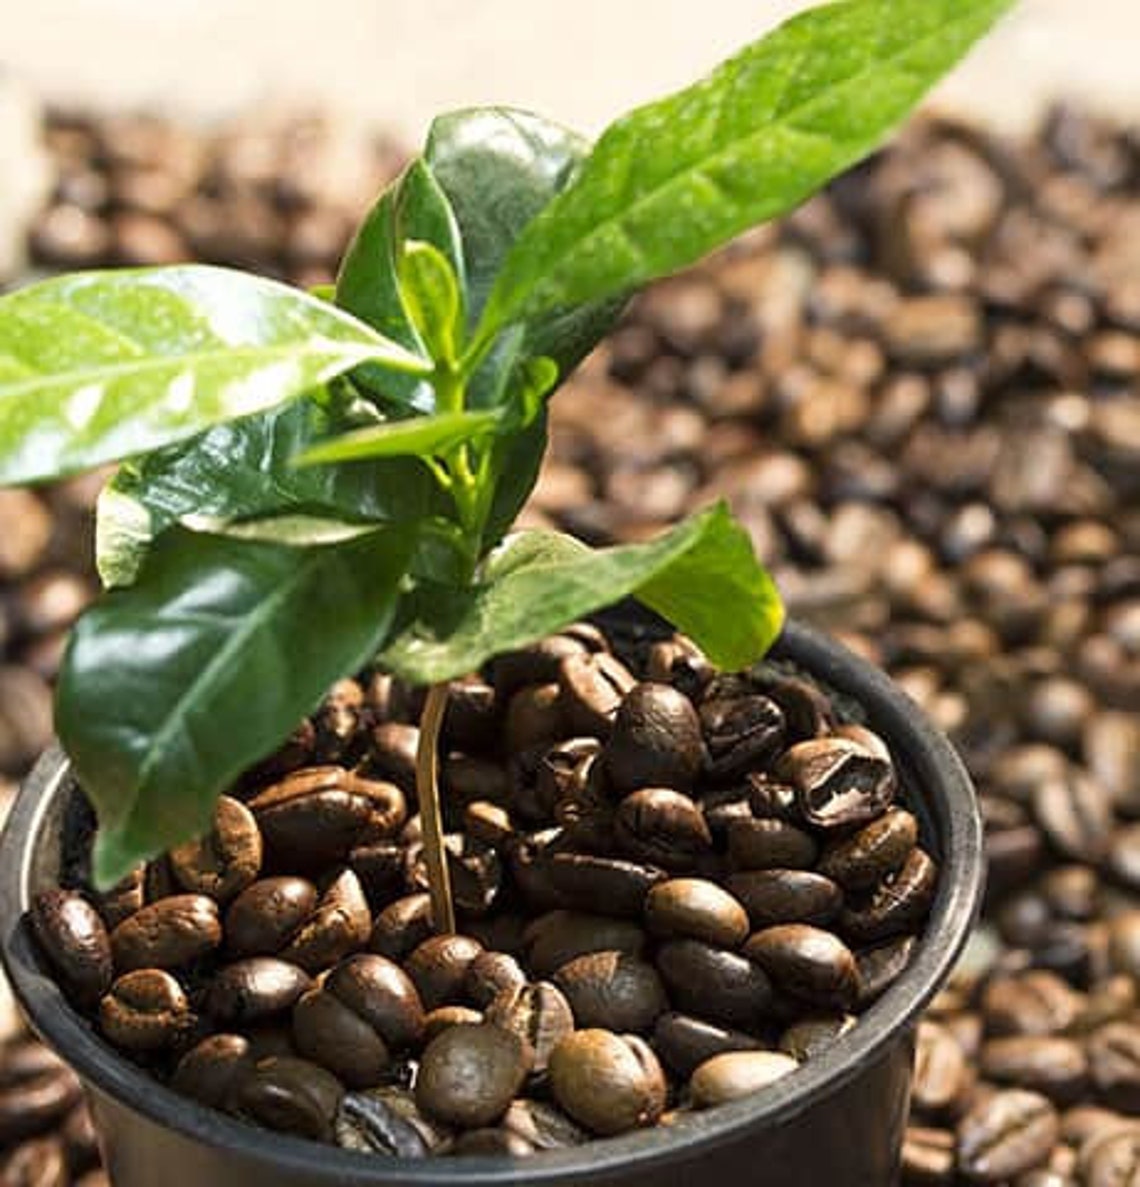 Coffee Bean planting Seeds DWARF COFFEE PLANT seeds | Etsy